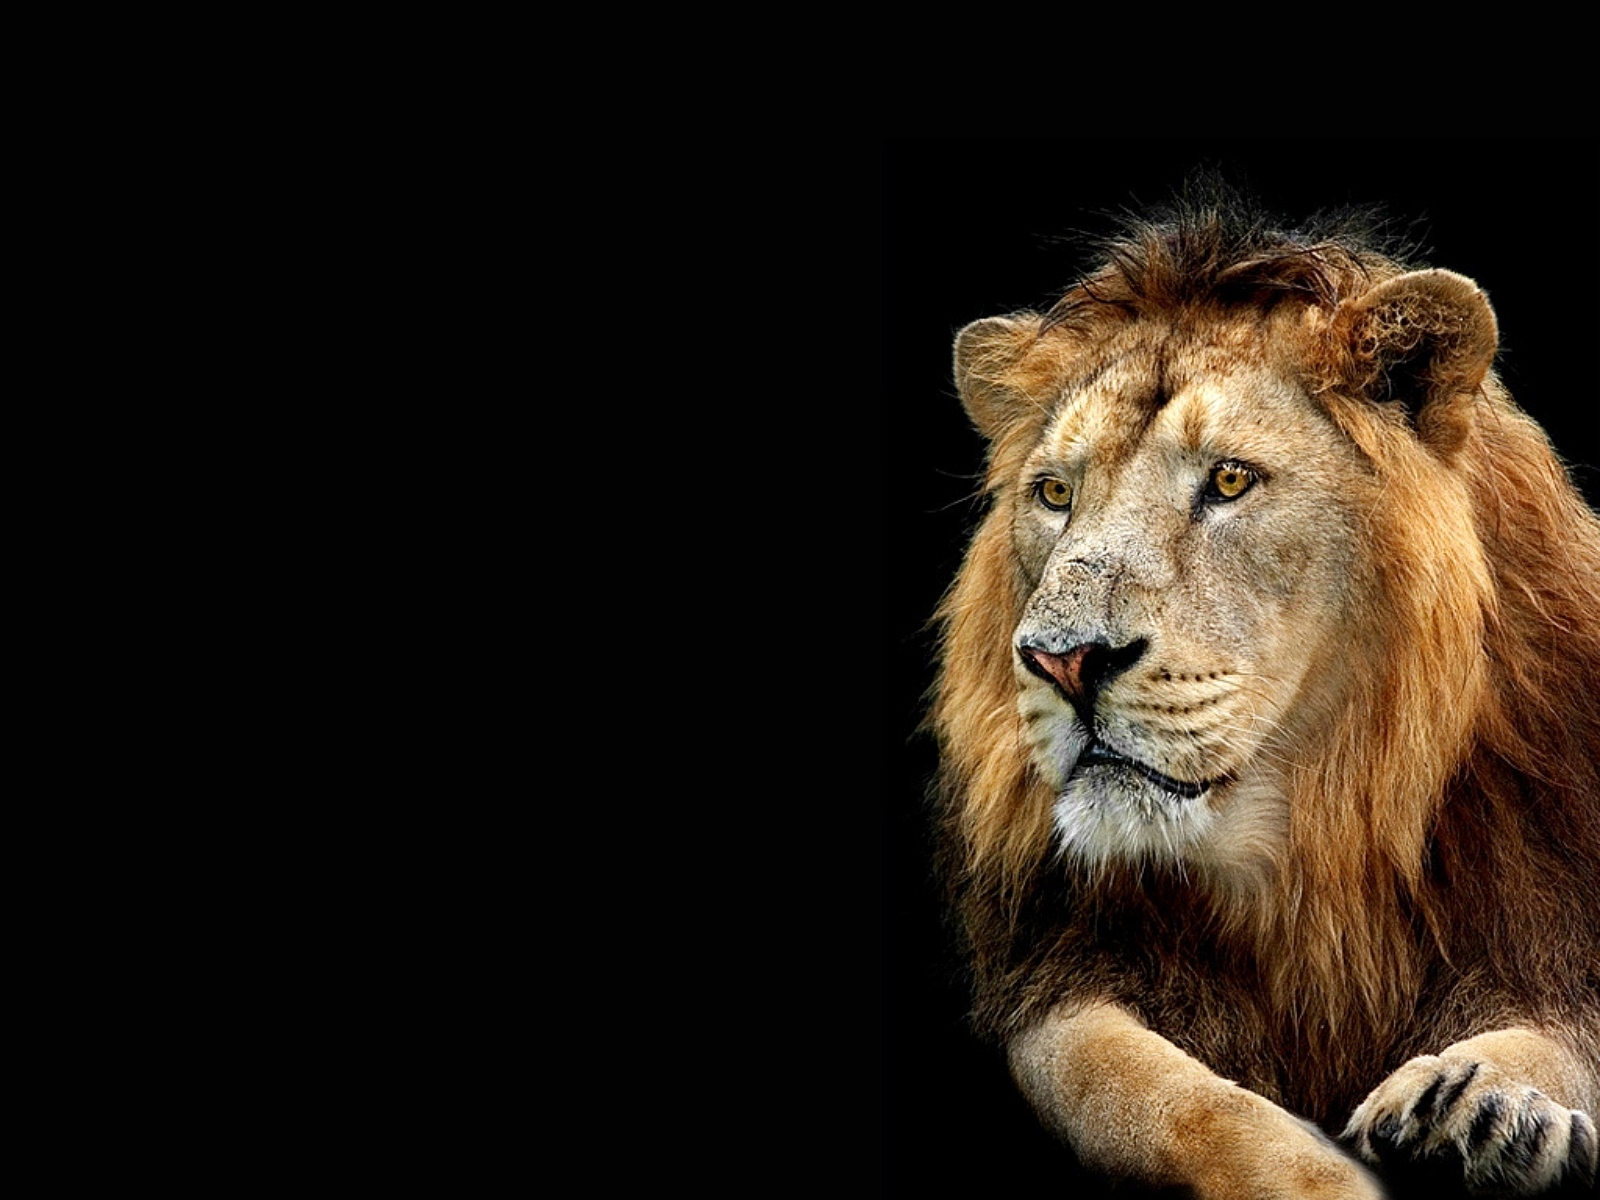  43 3D  Wallpaper  Desktop  Backgrounds  Lion  on WallpaperSafari